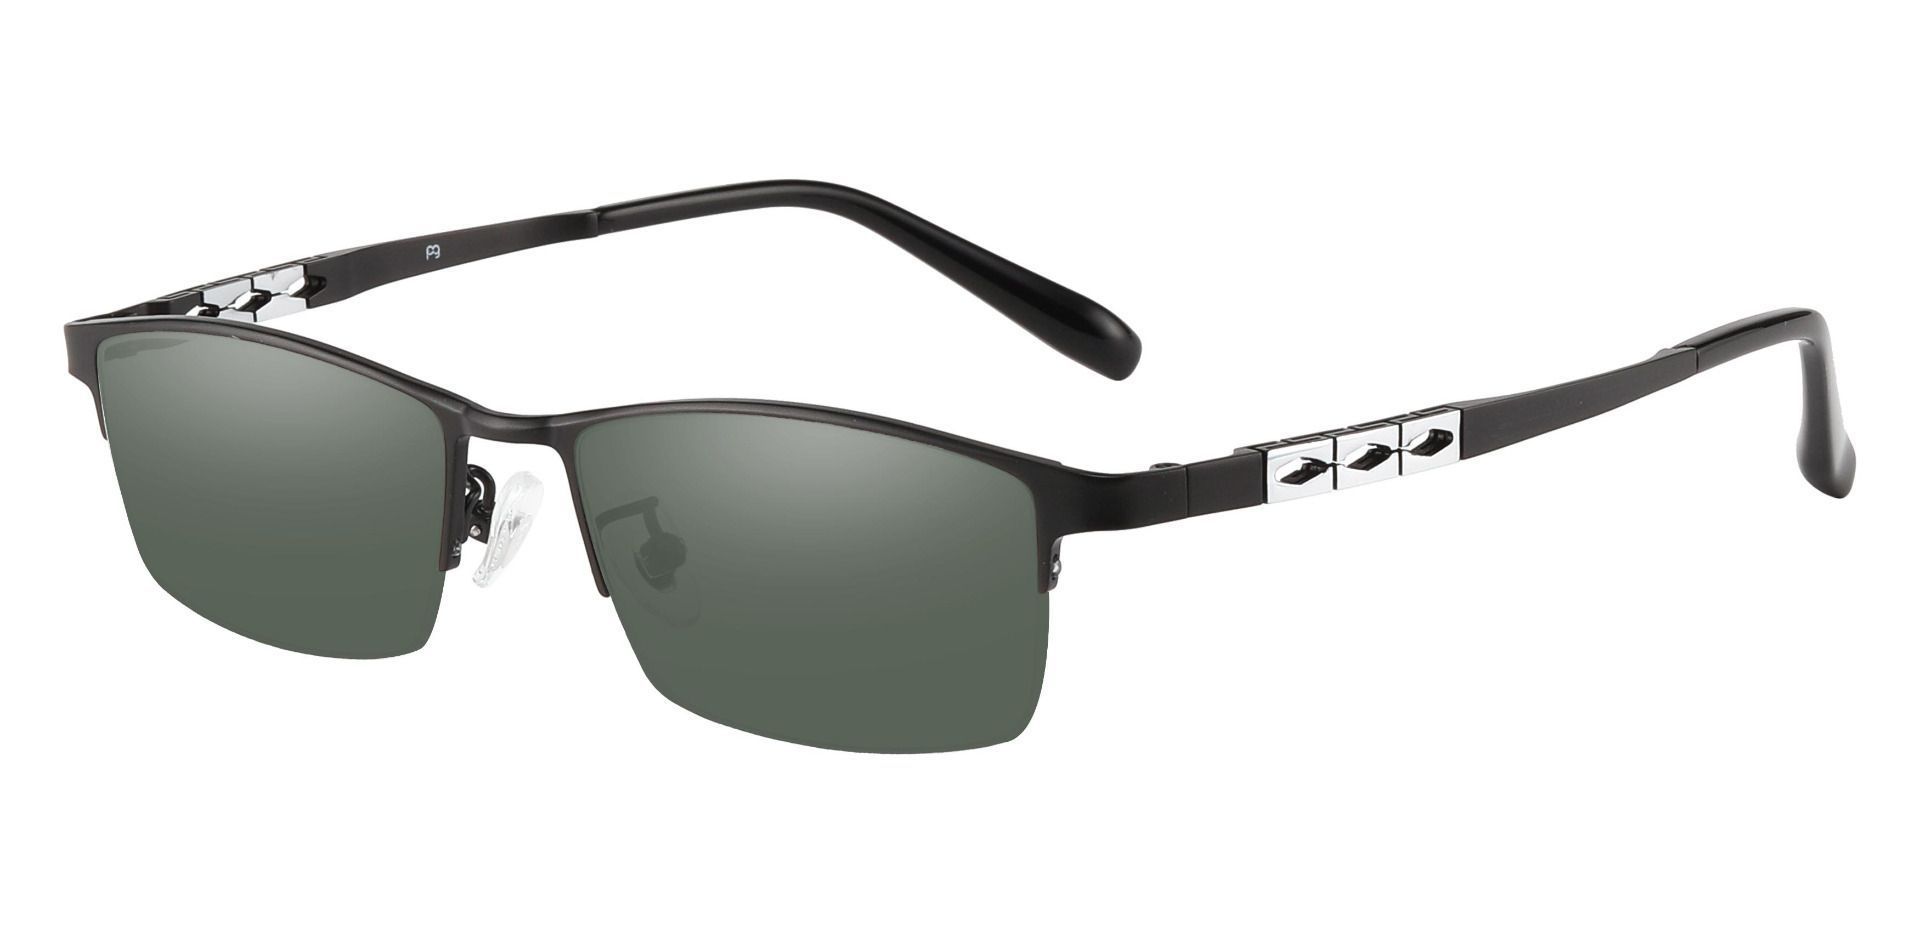 Burlington Rectangle Reading Sunglasses - Black Frame With Green Lenses